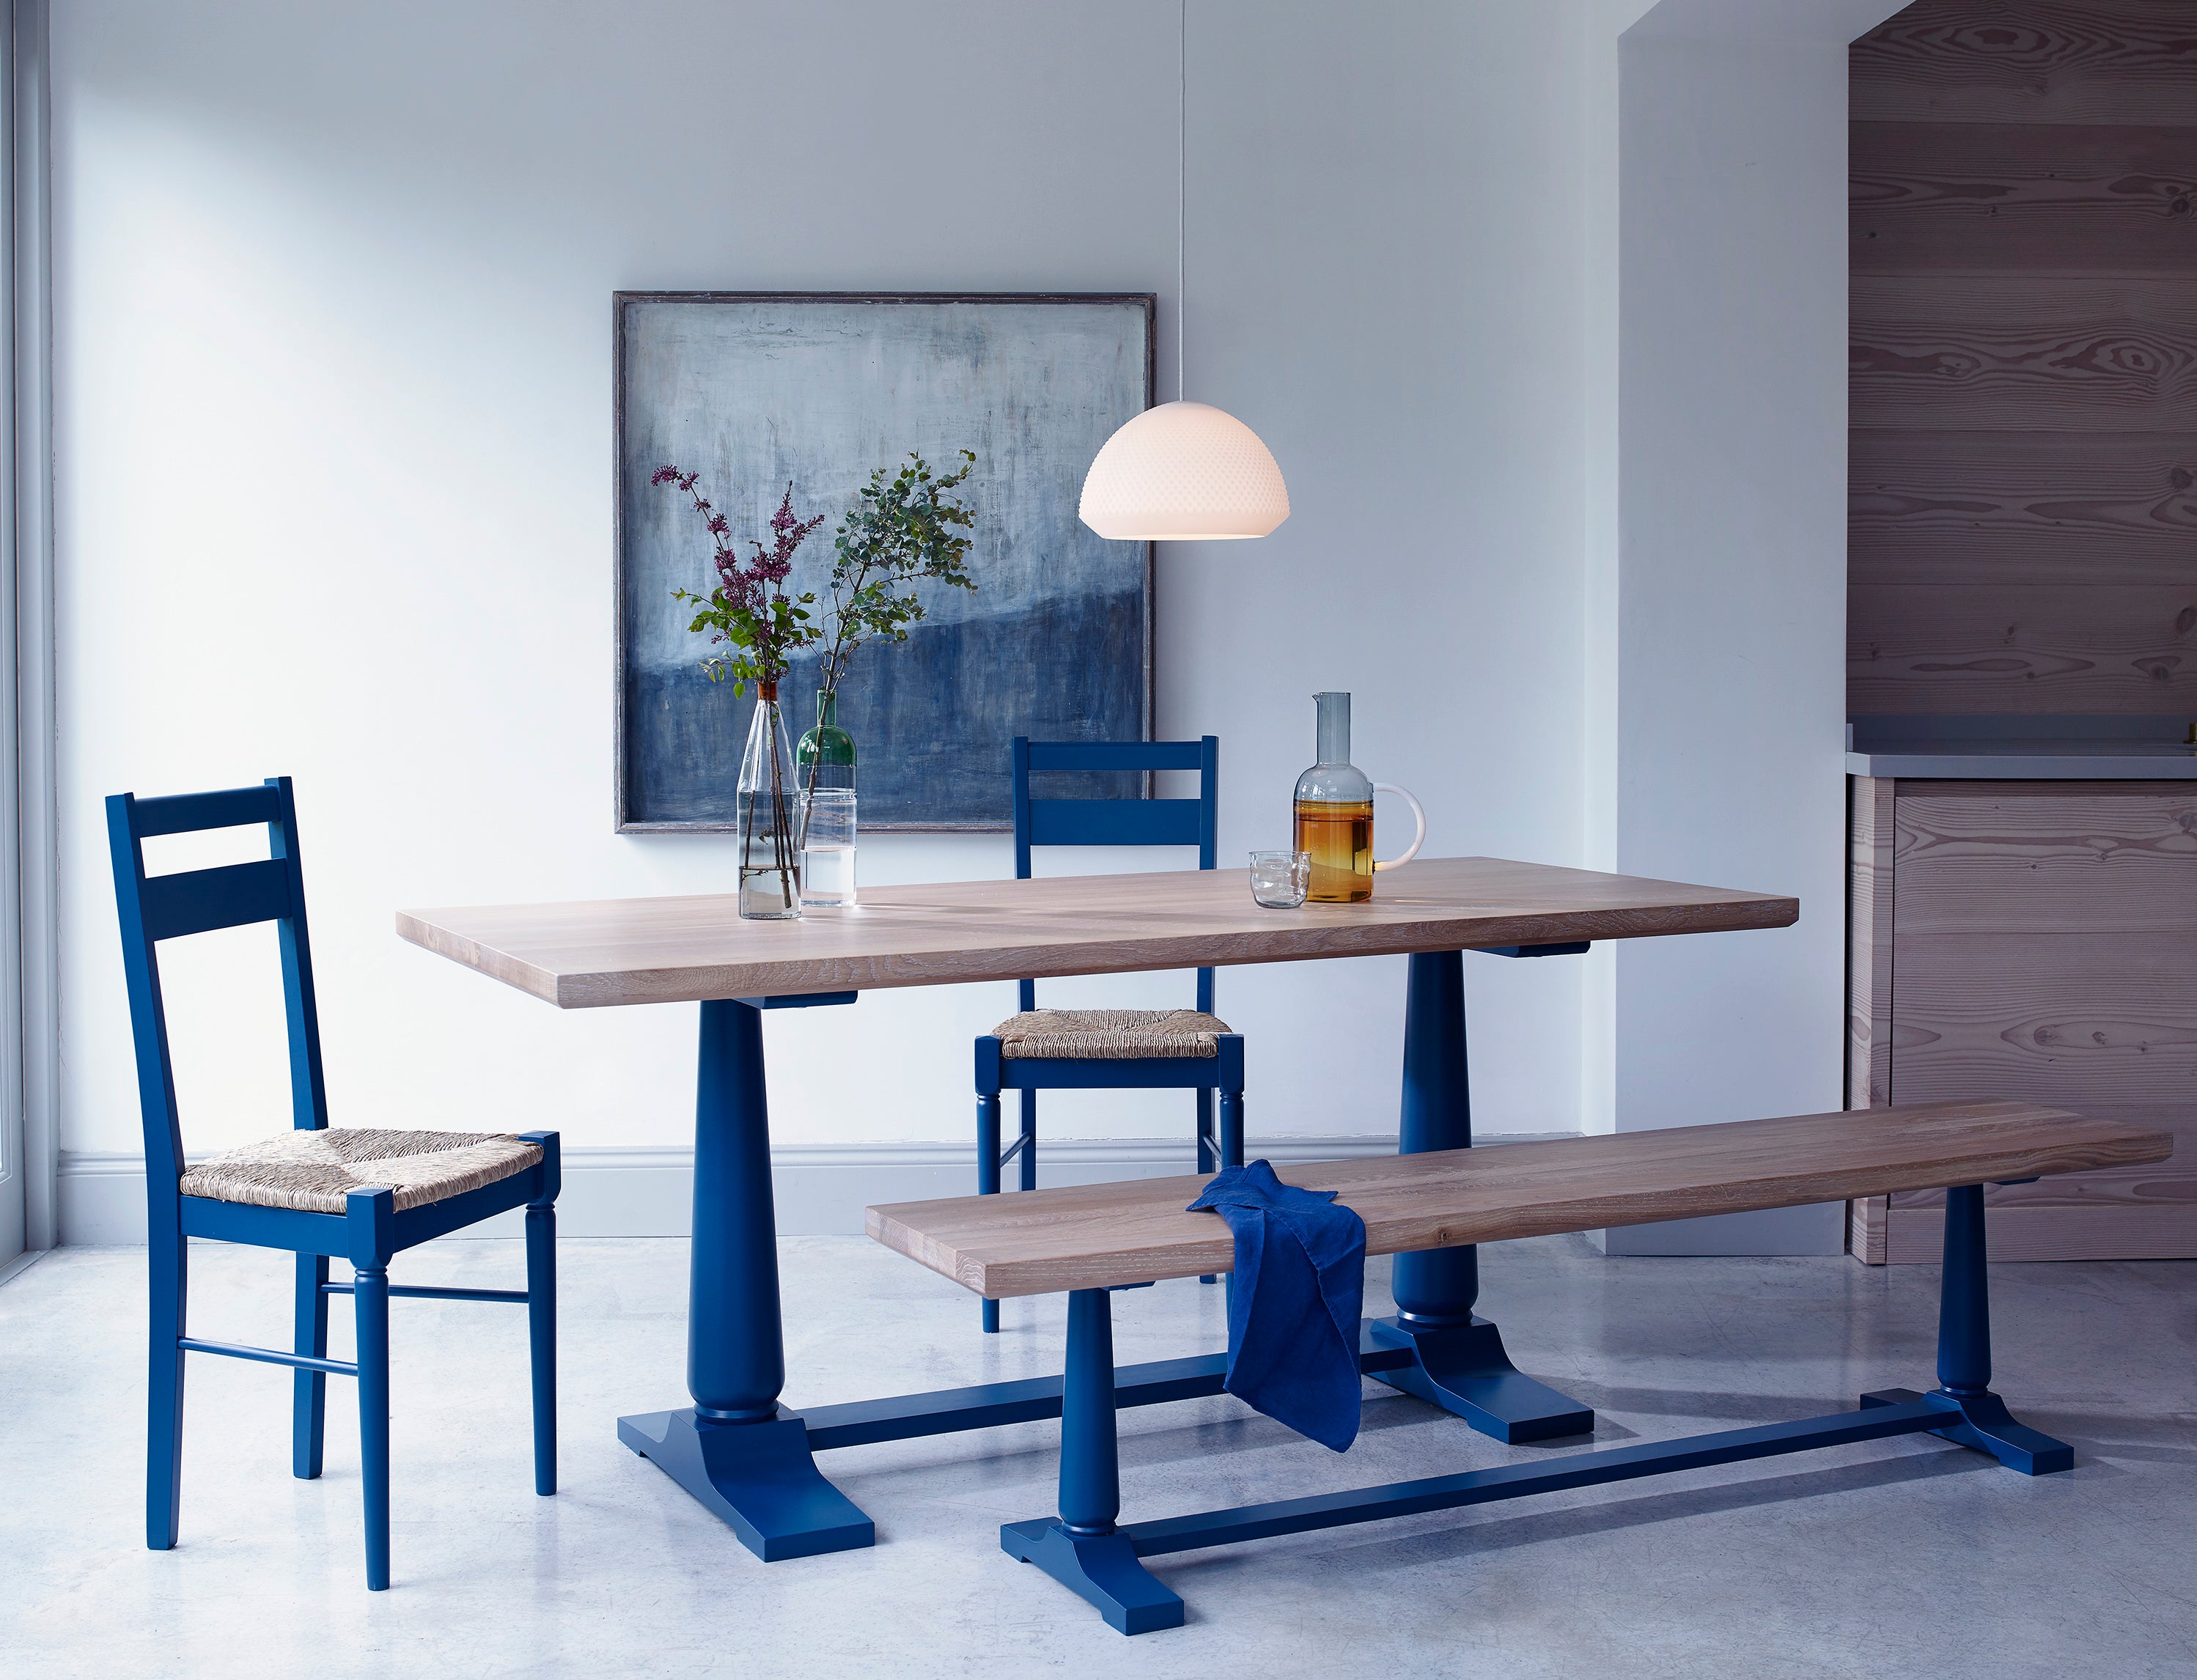 Pinner Range - Heals - Kirsty Whyte - UK Furniture Designer